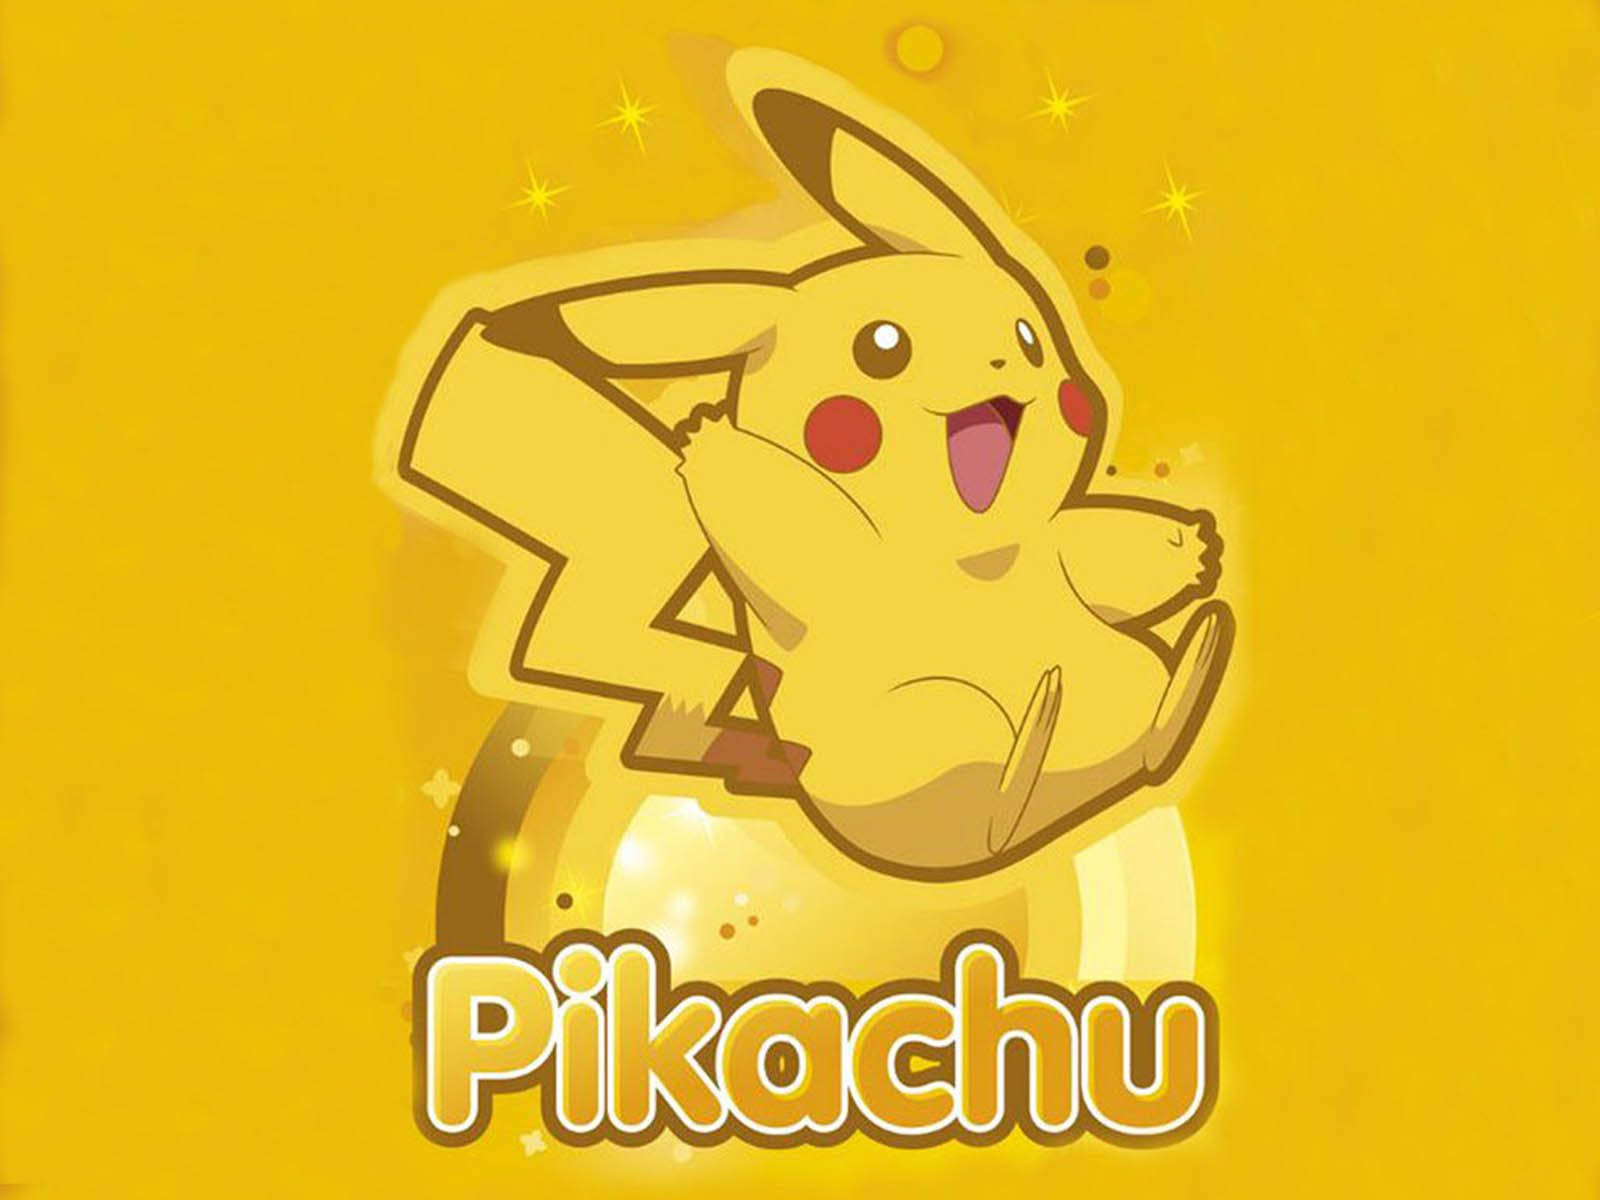 Pikachu 3d Kanto Region Pokémon Wallpaper